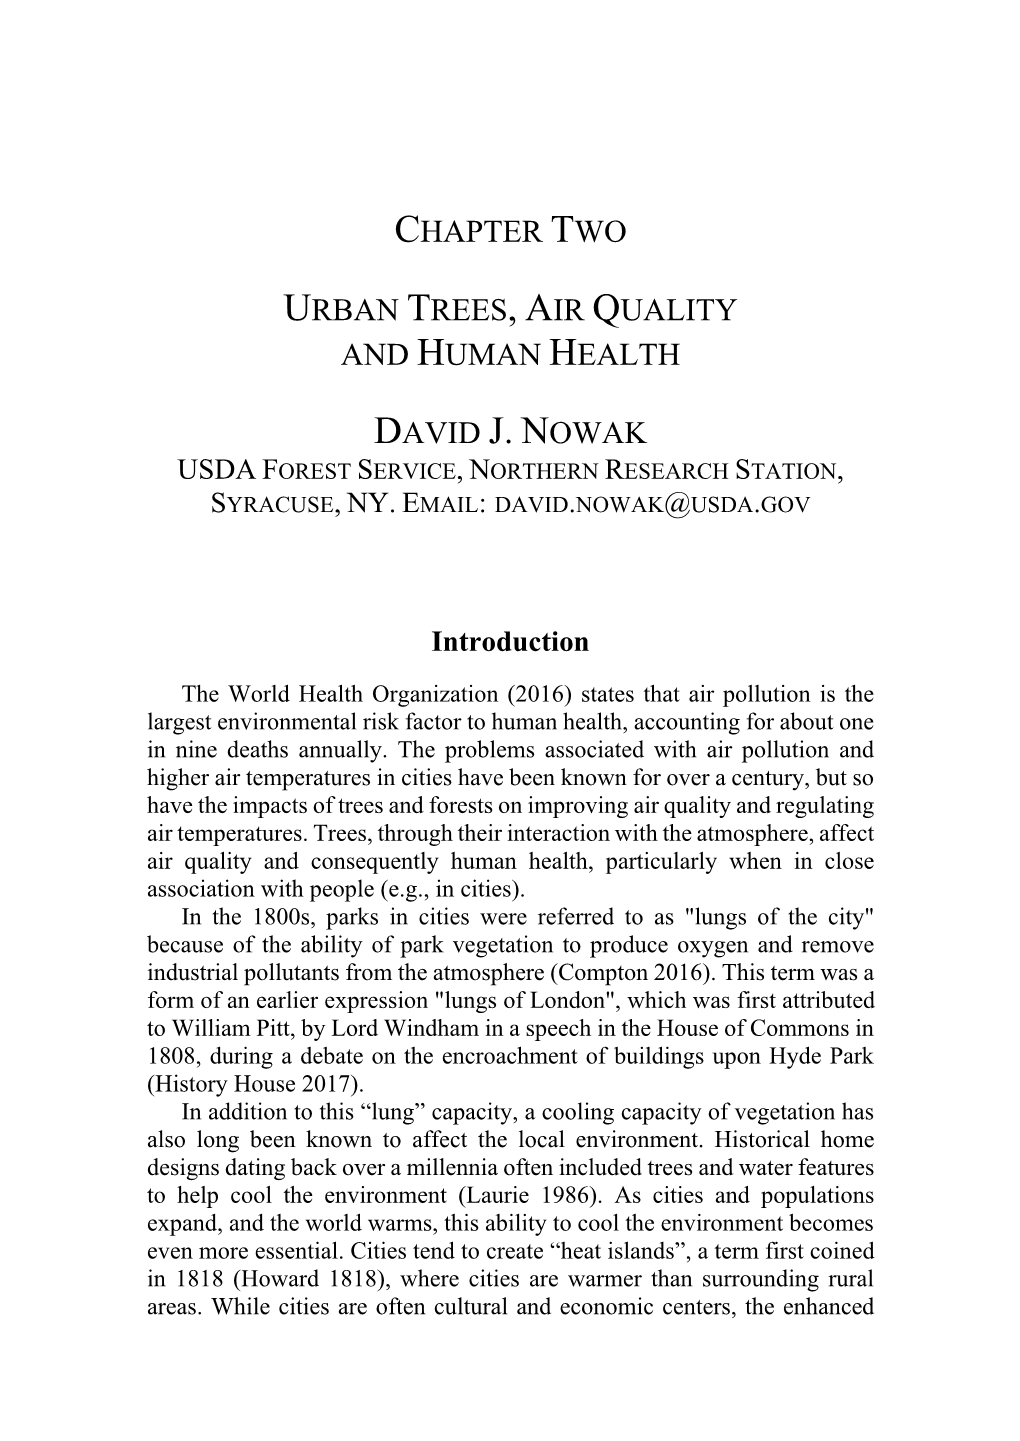 Urban Trees, Air Quality and Human Health